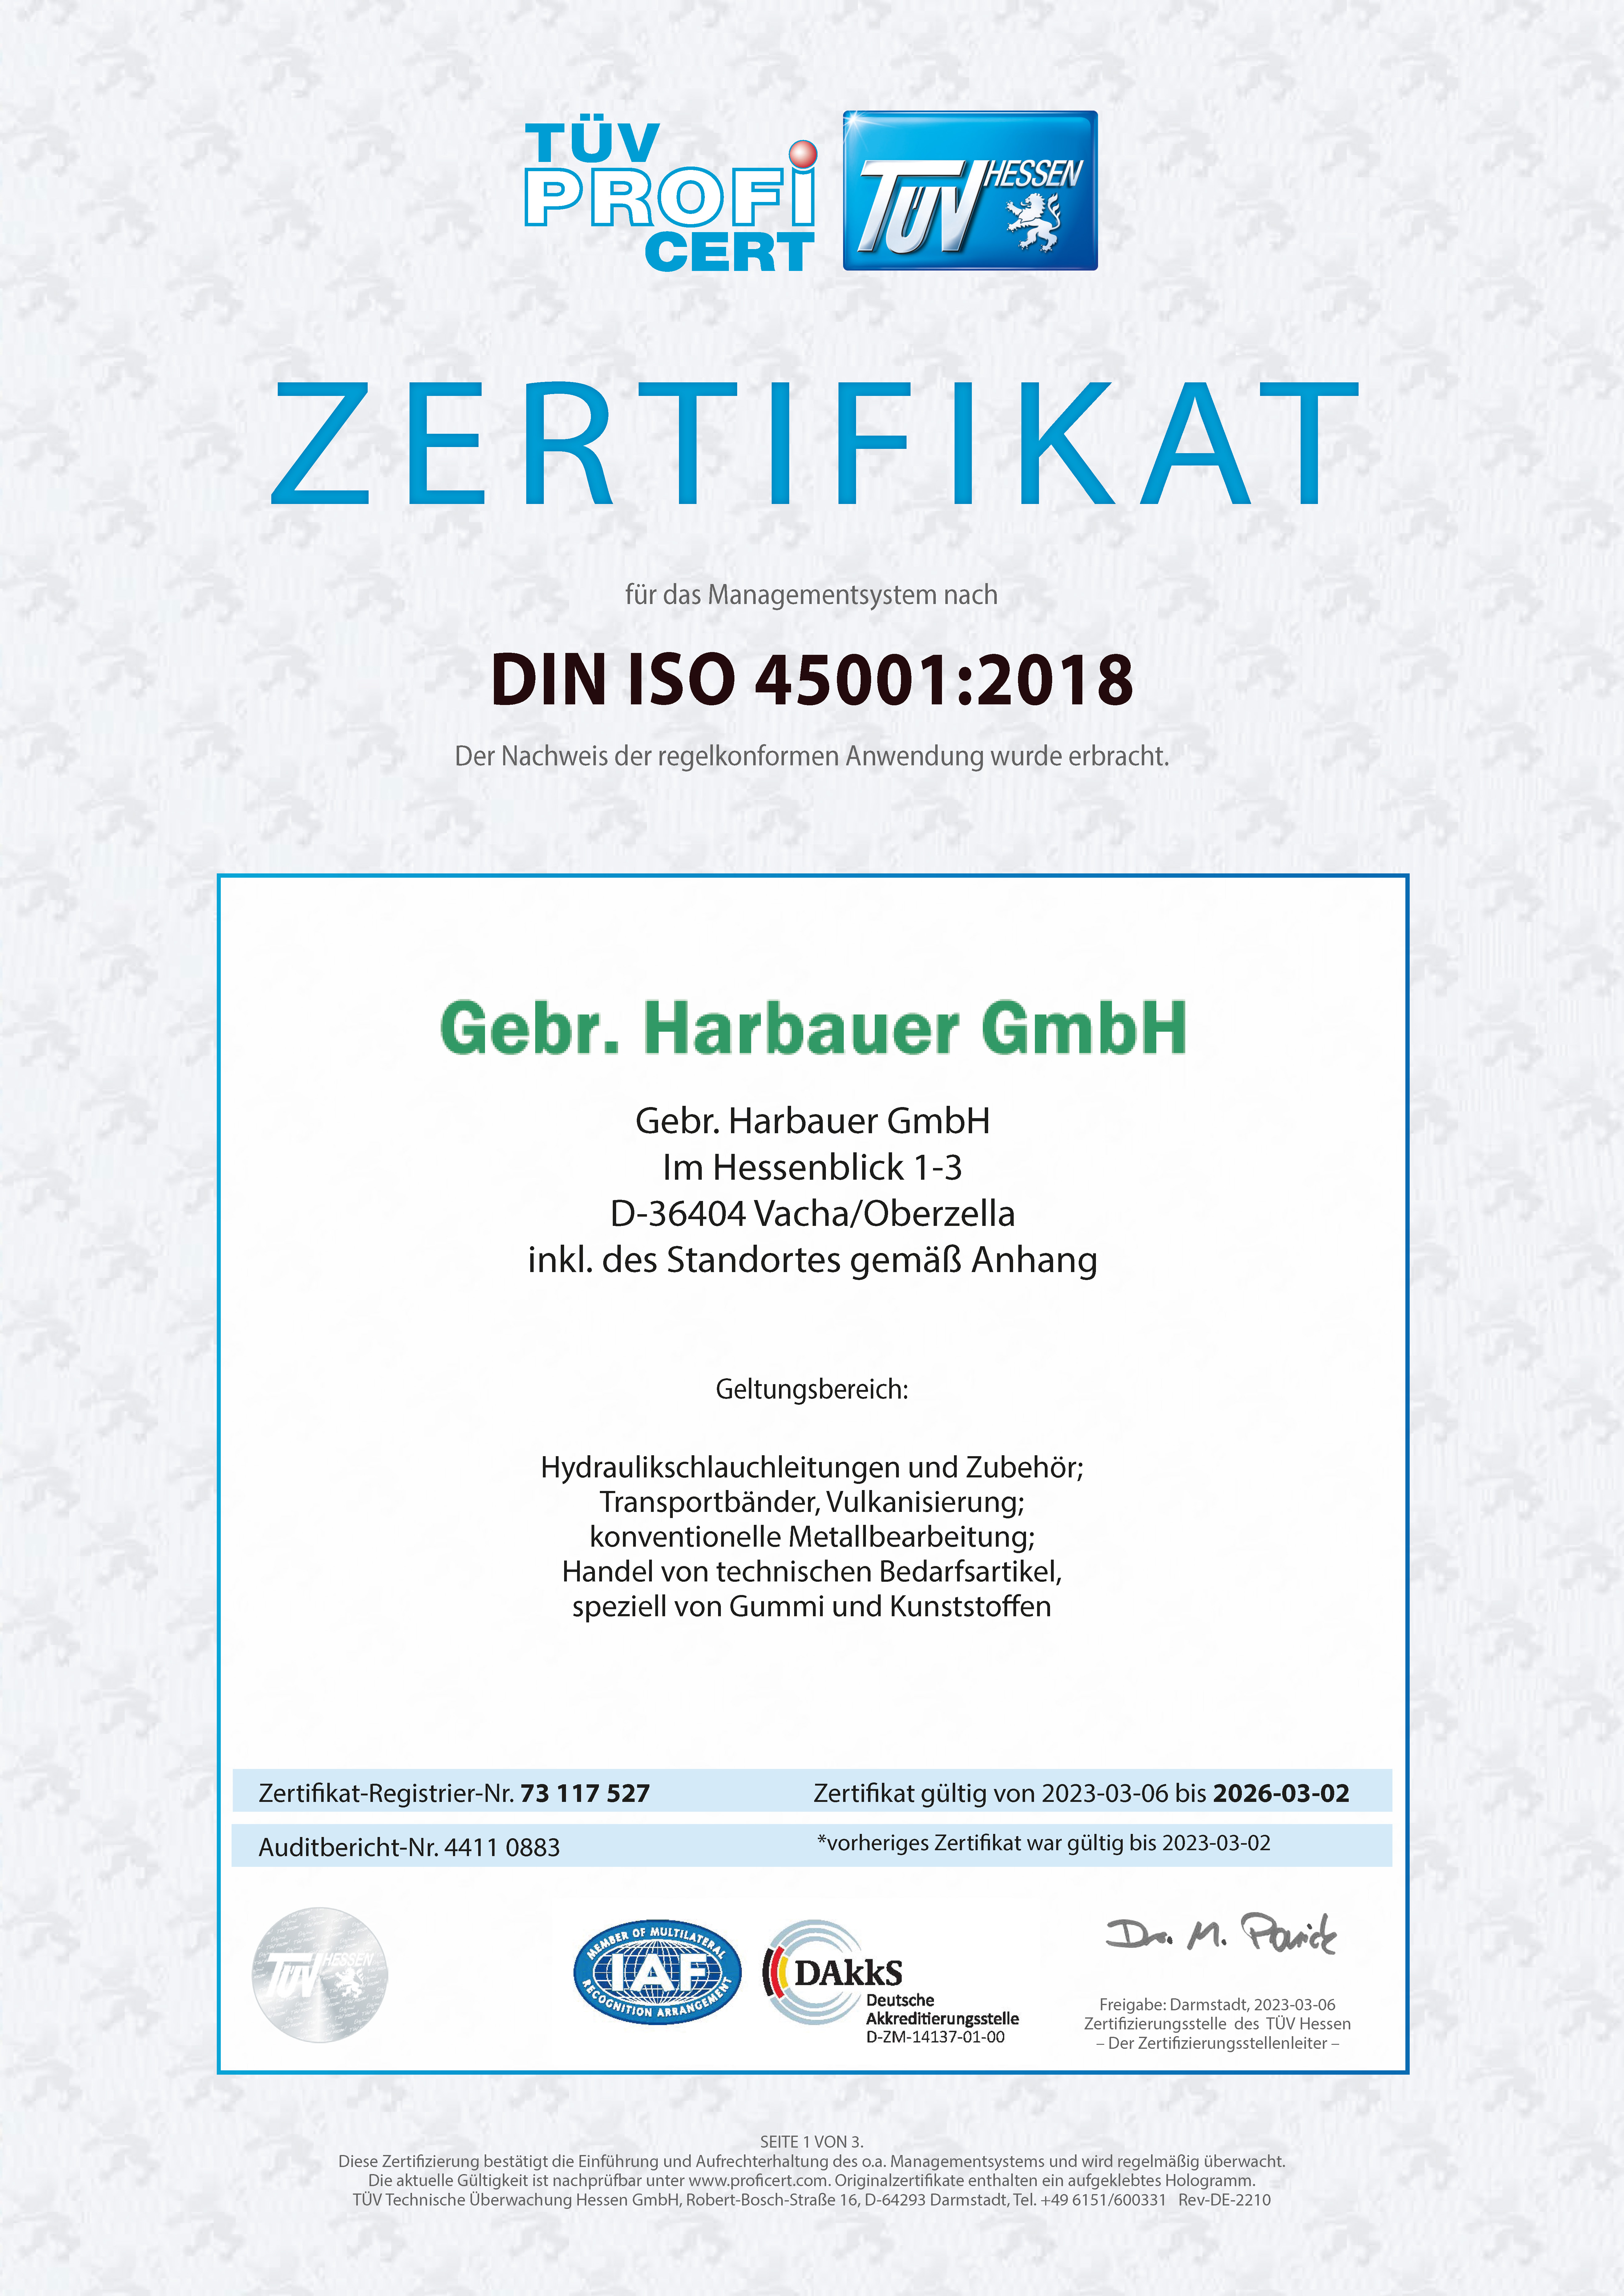 Zertifikat Gebrüder Harbauer GmbH